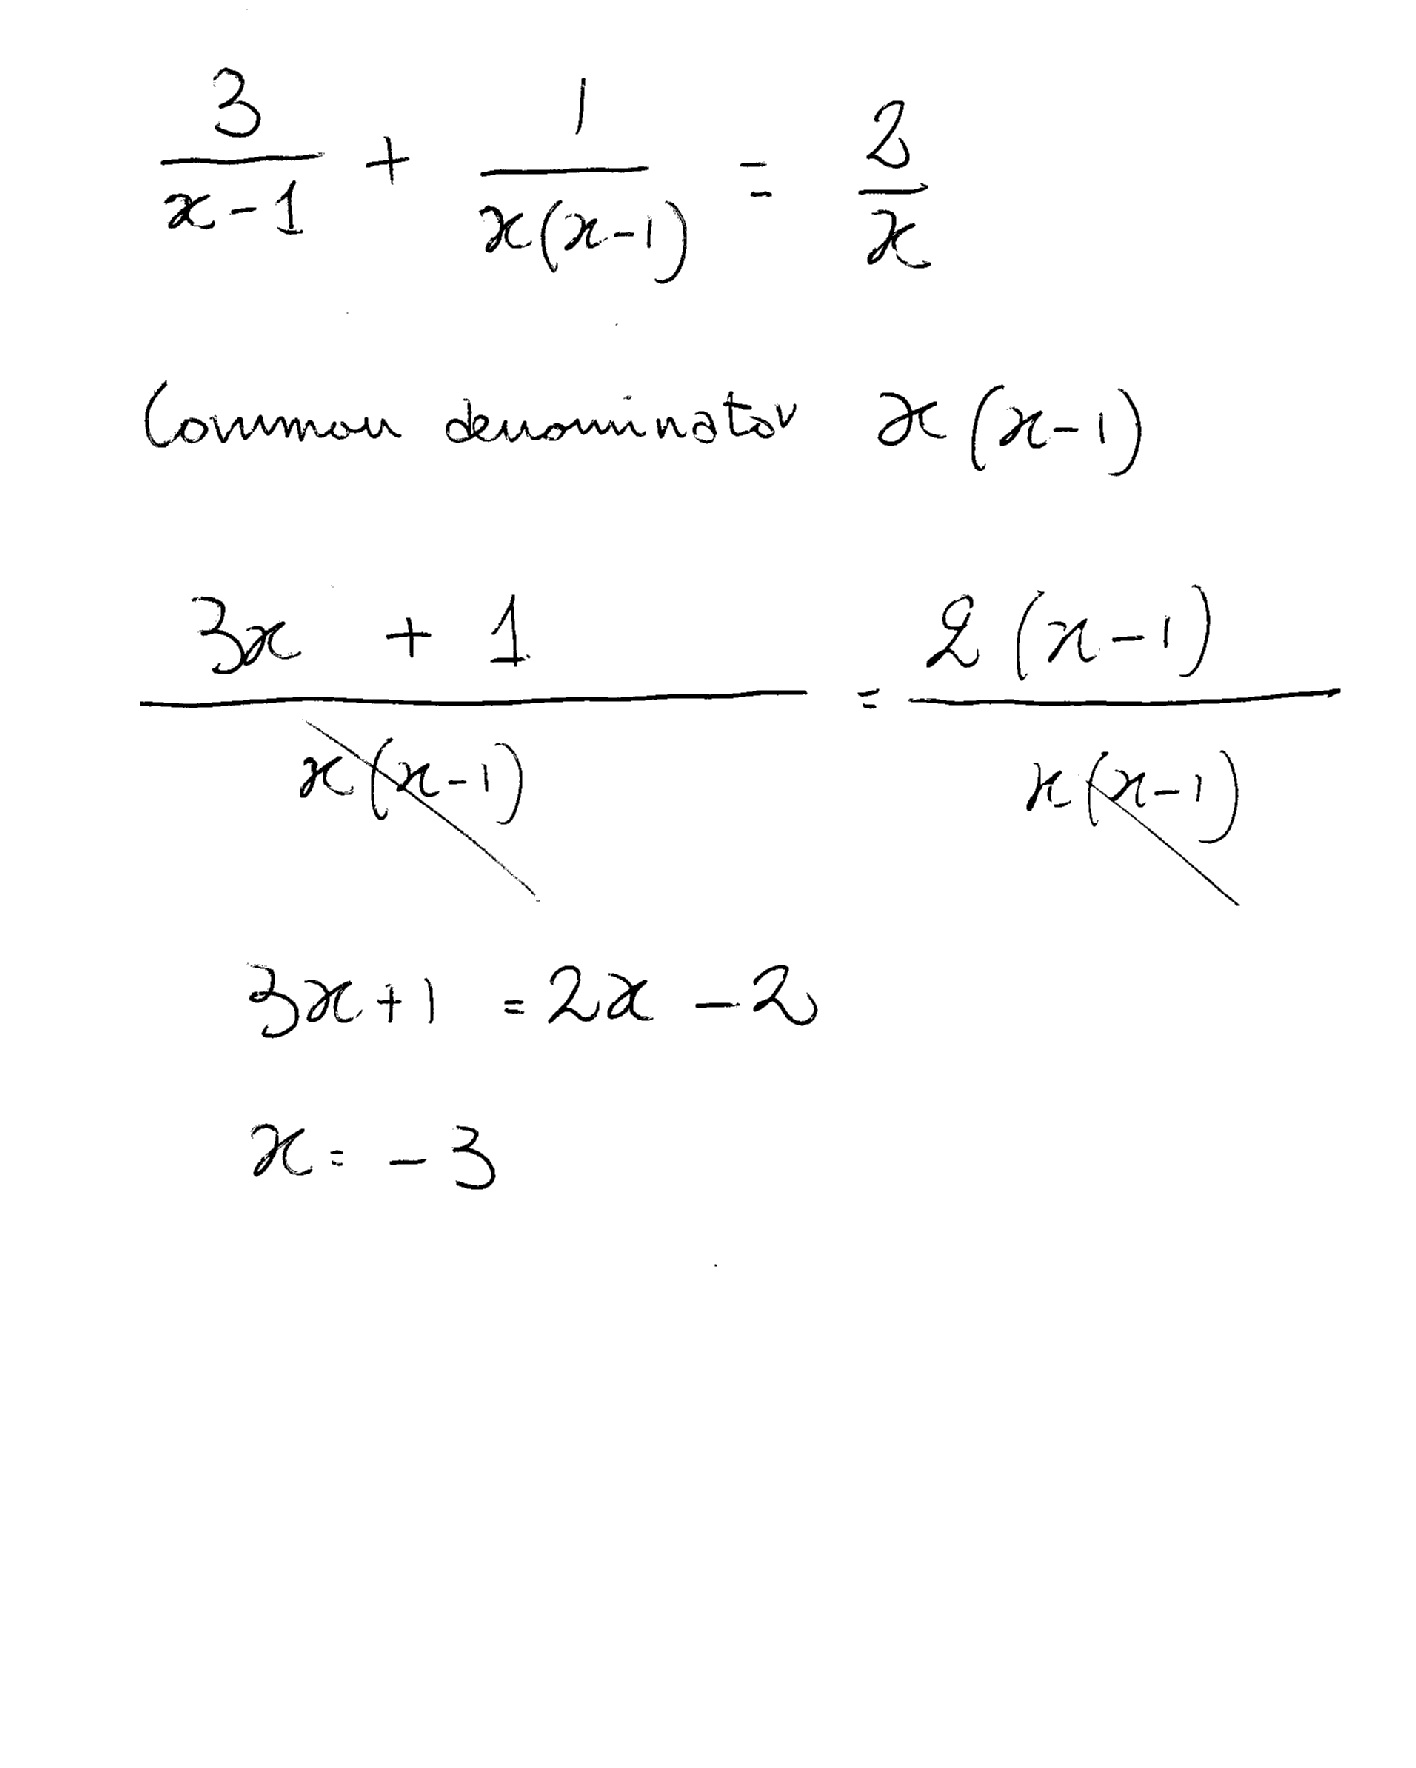 How do you solve 3 / (x - 1) + 1 / (x(x - 1)) = 2 / x? | Socratic